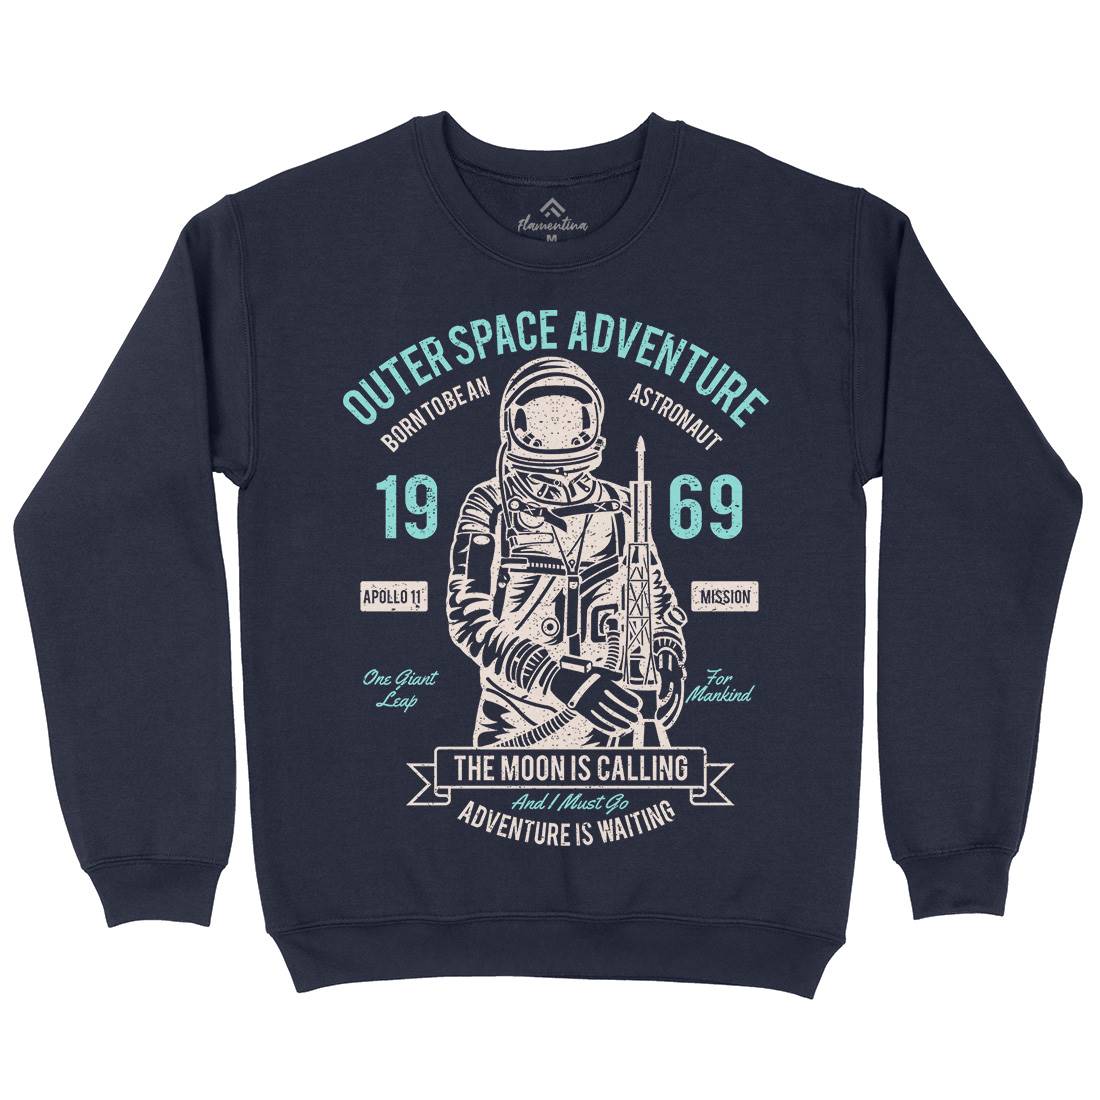 Outer Adventure 69 Kids Crew Neck Sweatshirt Space A106